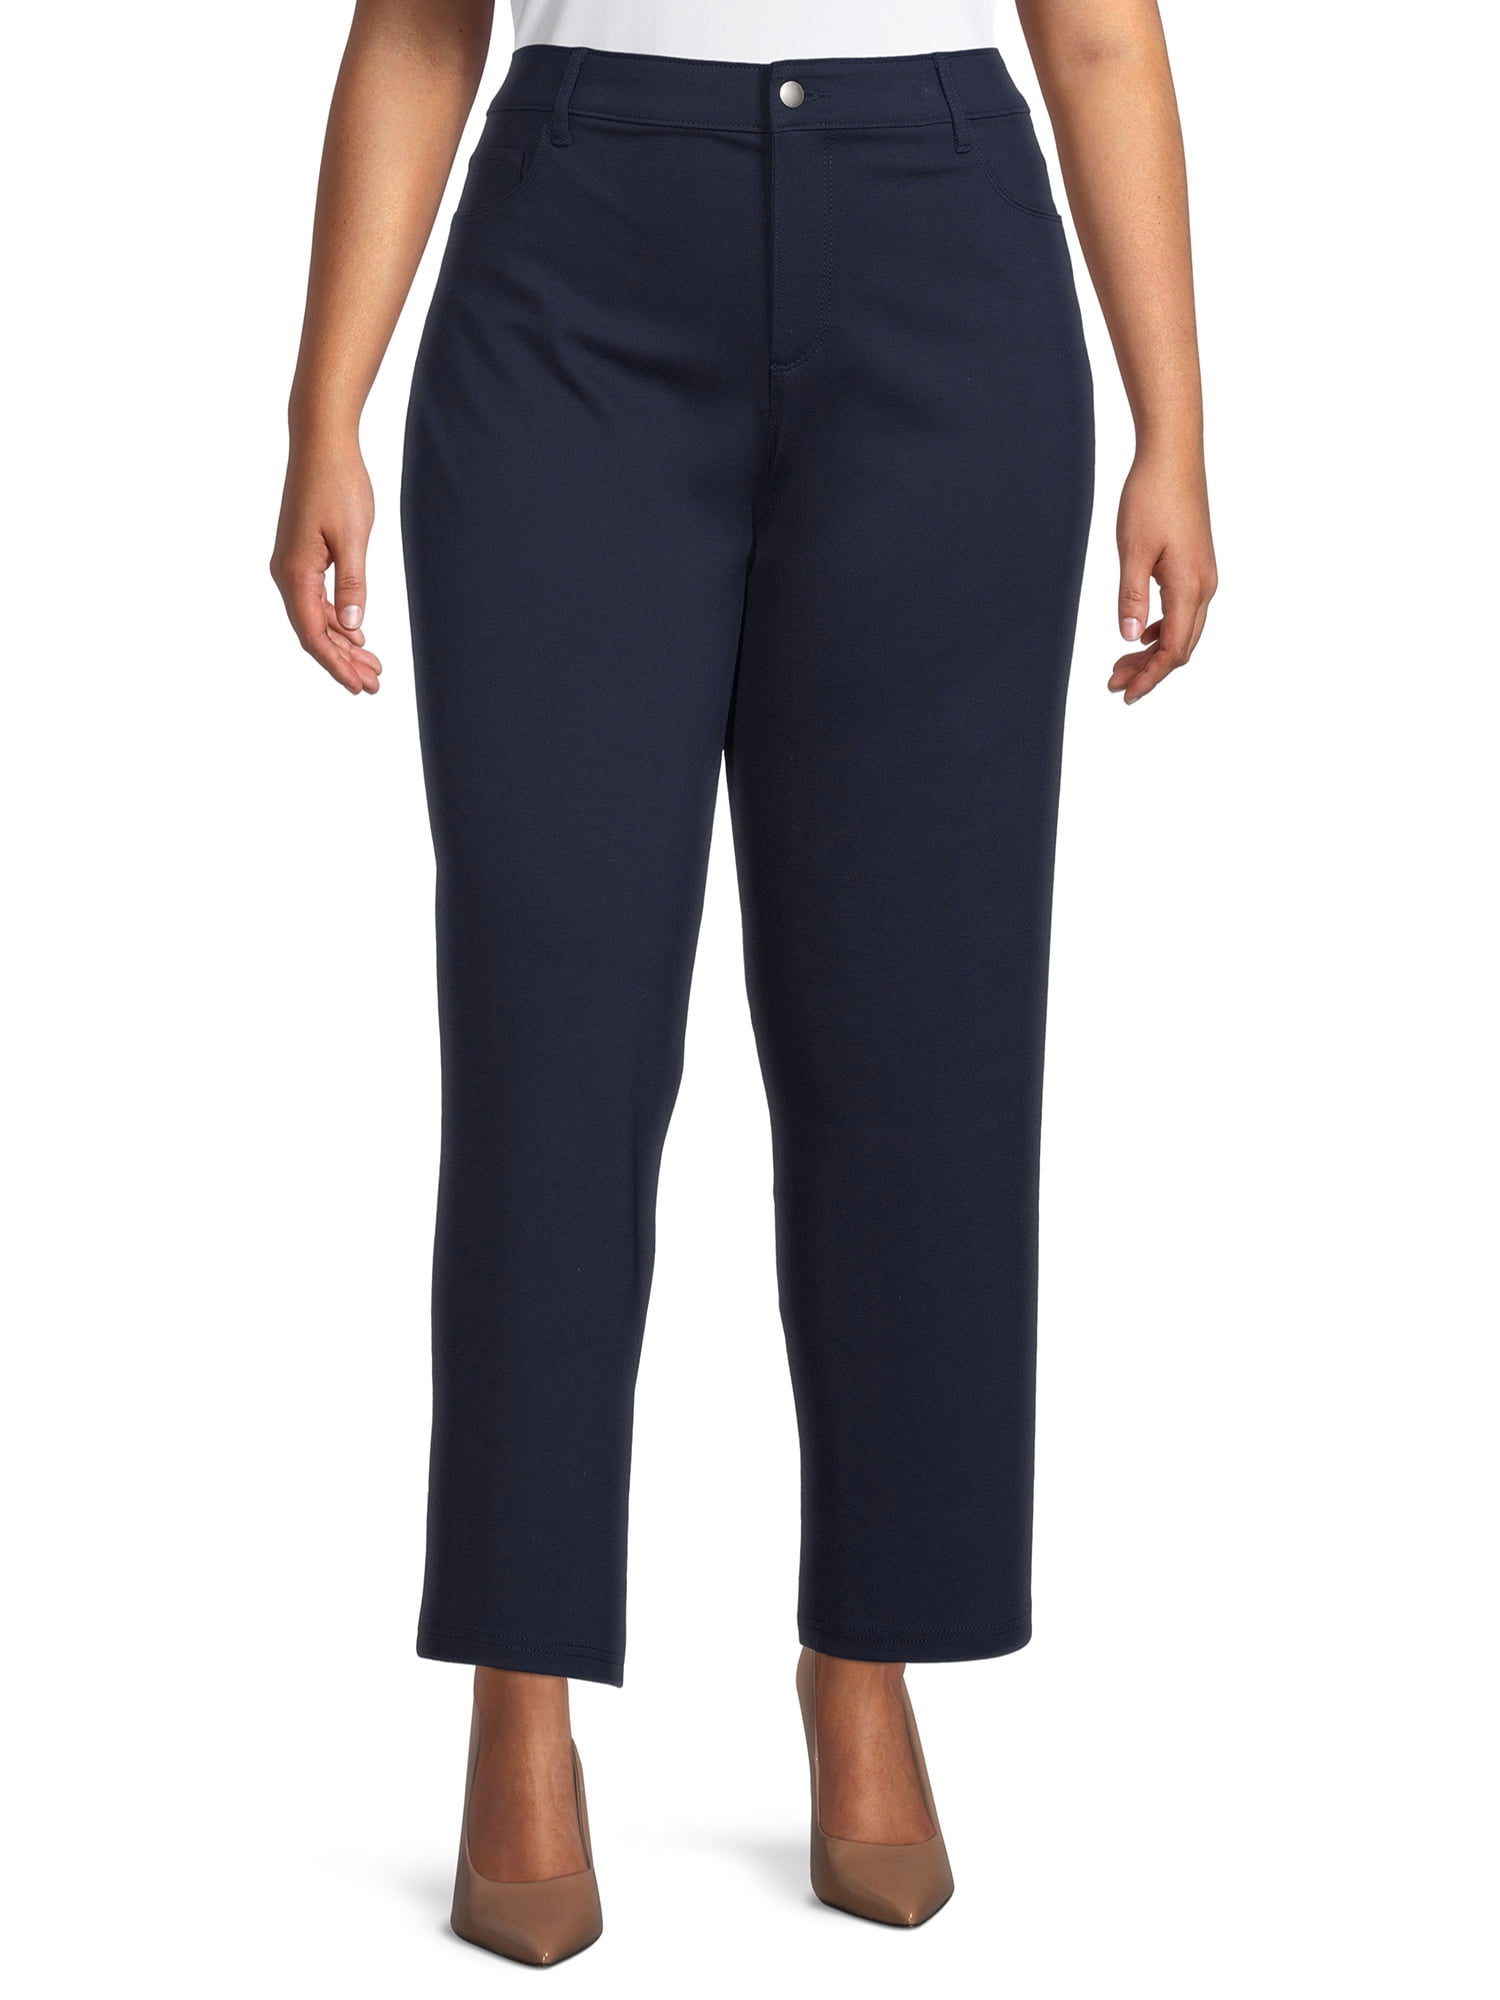 24W Perfect Khaki NEW Simply Emma Women's Capri Pants Bi Stretch size 18W